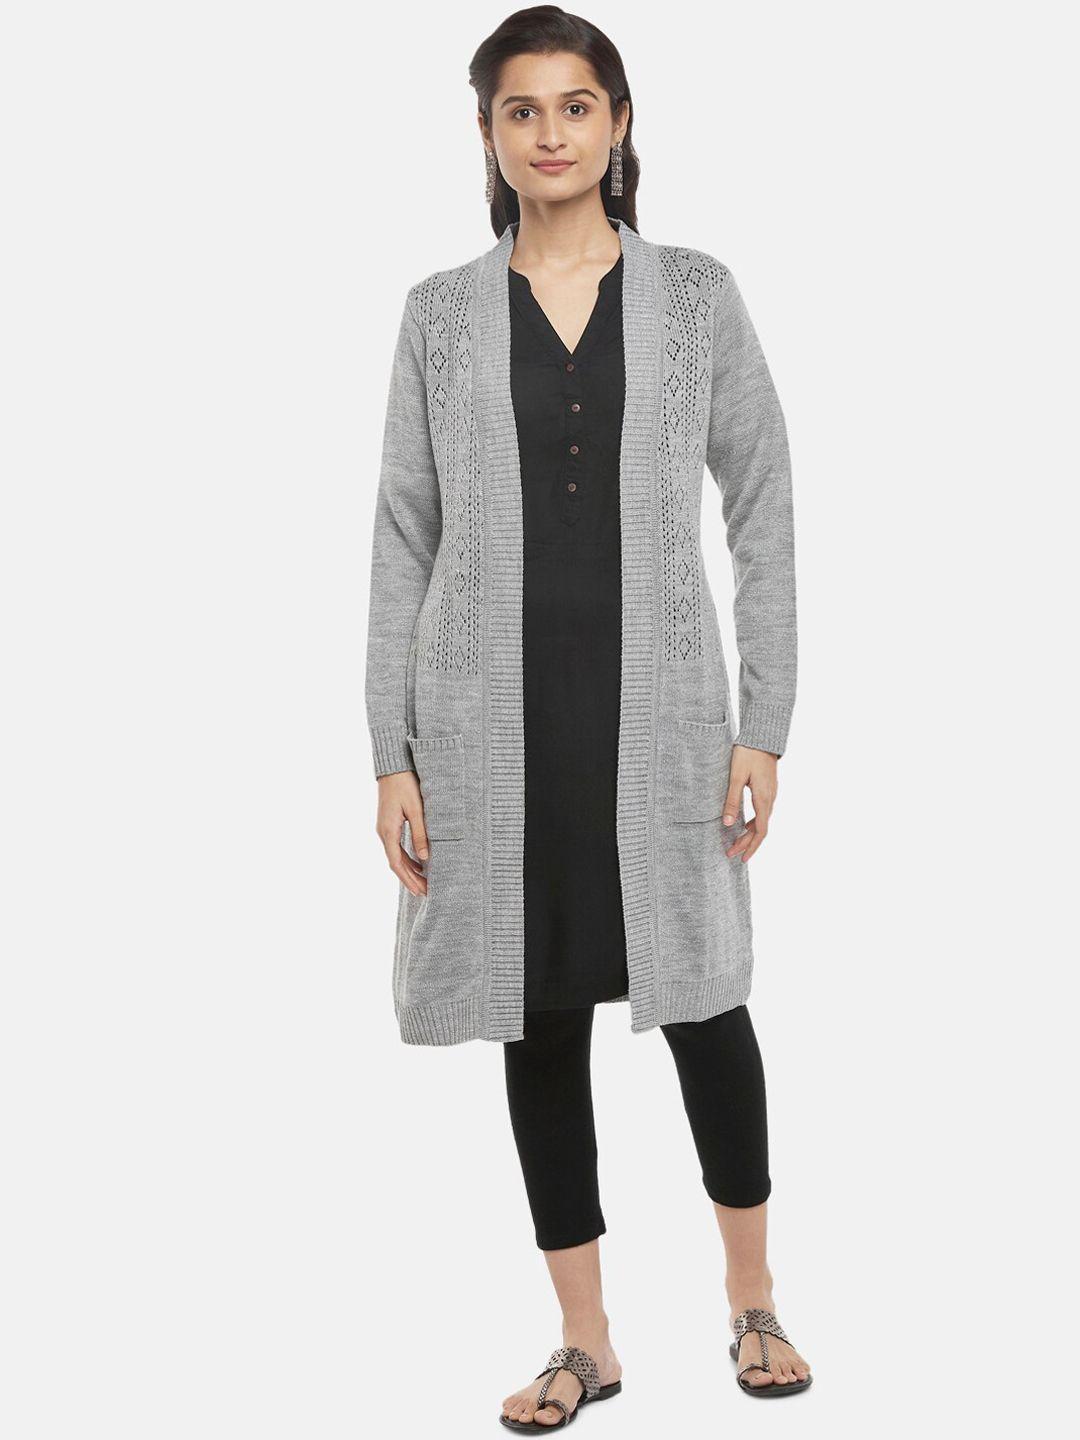 rangmanch by pantaloons women grey acrylic longline open front jacket